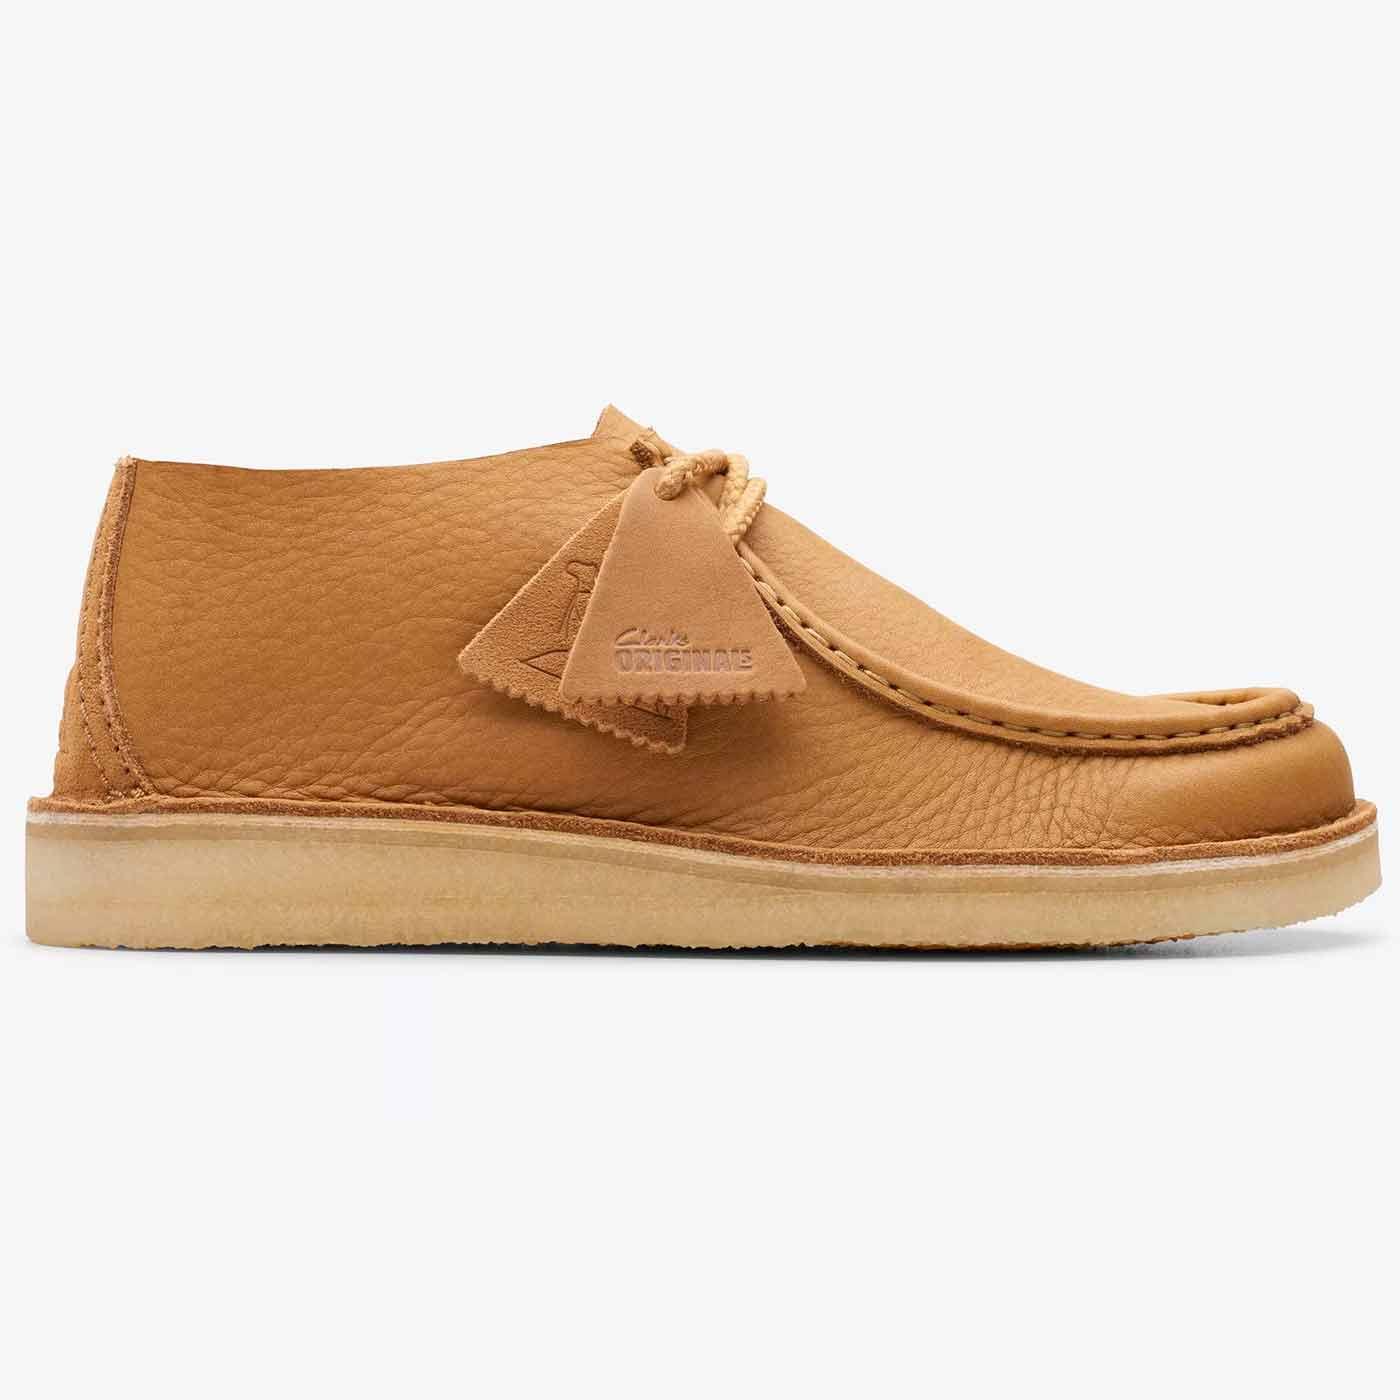 Desert Nomad Clarks Originals Tan Leather Shoes